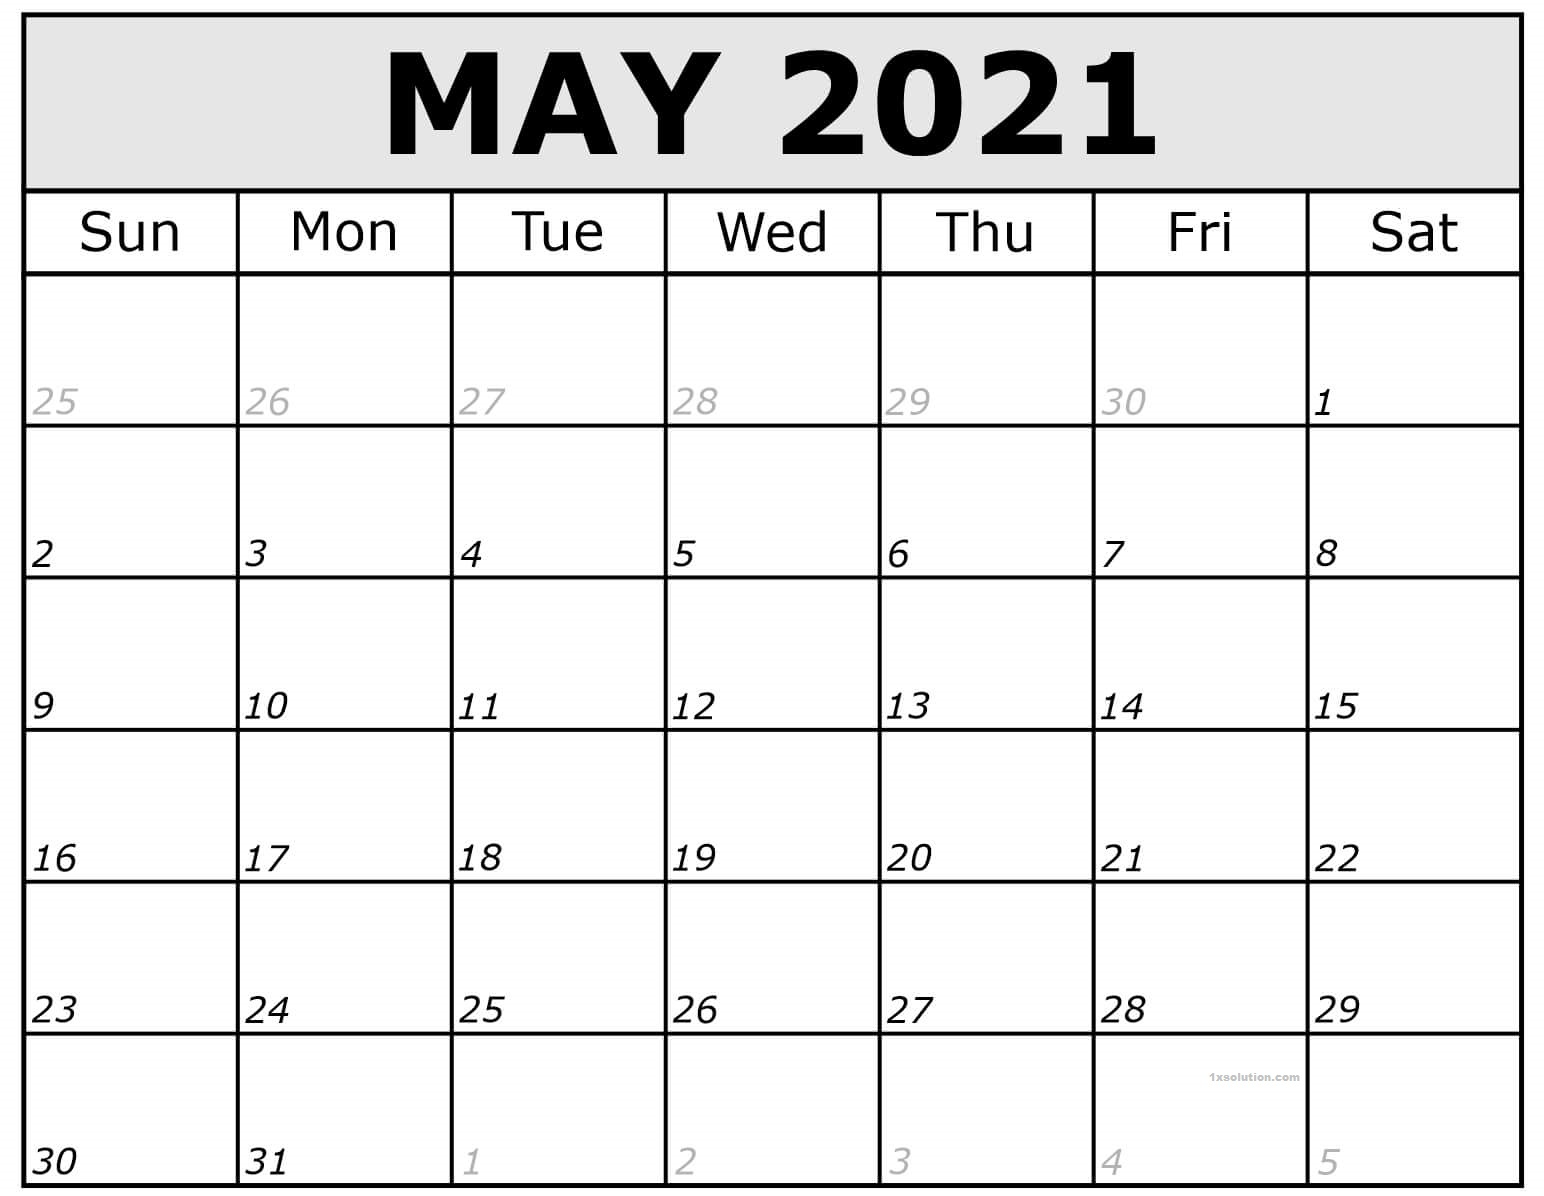 Download Calendar May 2021 - Zhudamodel